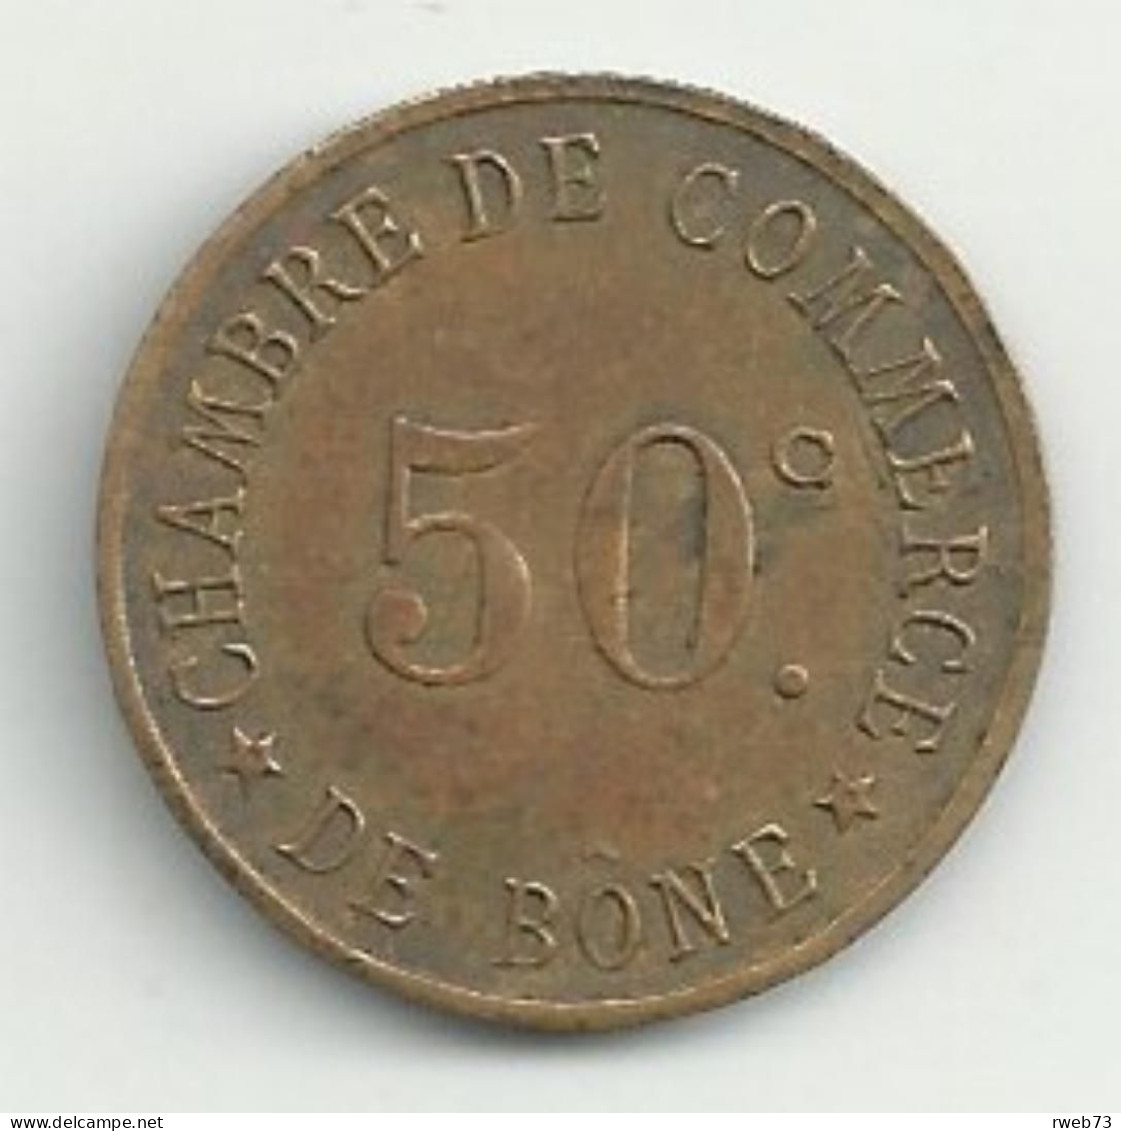 Nécessité - BONE - 50 Centimes - TB/TTB - Monedas / De Necesidad